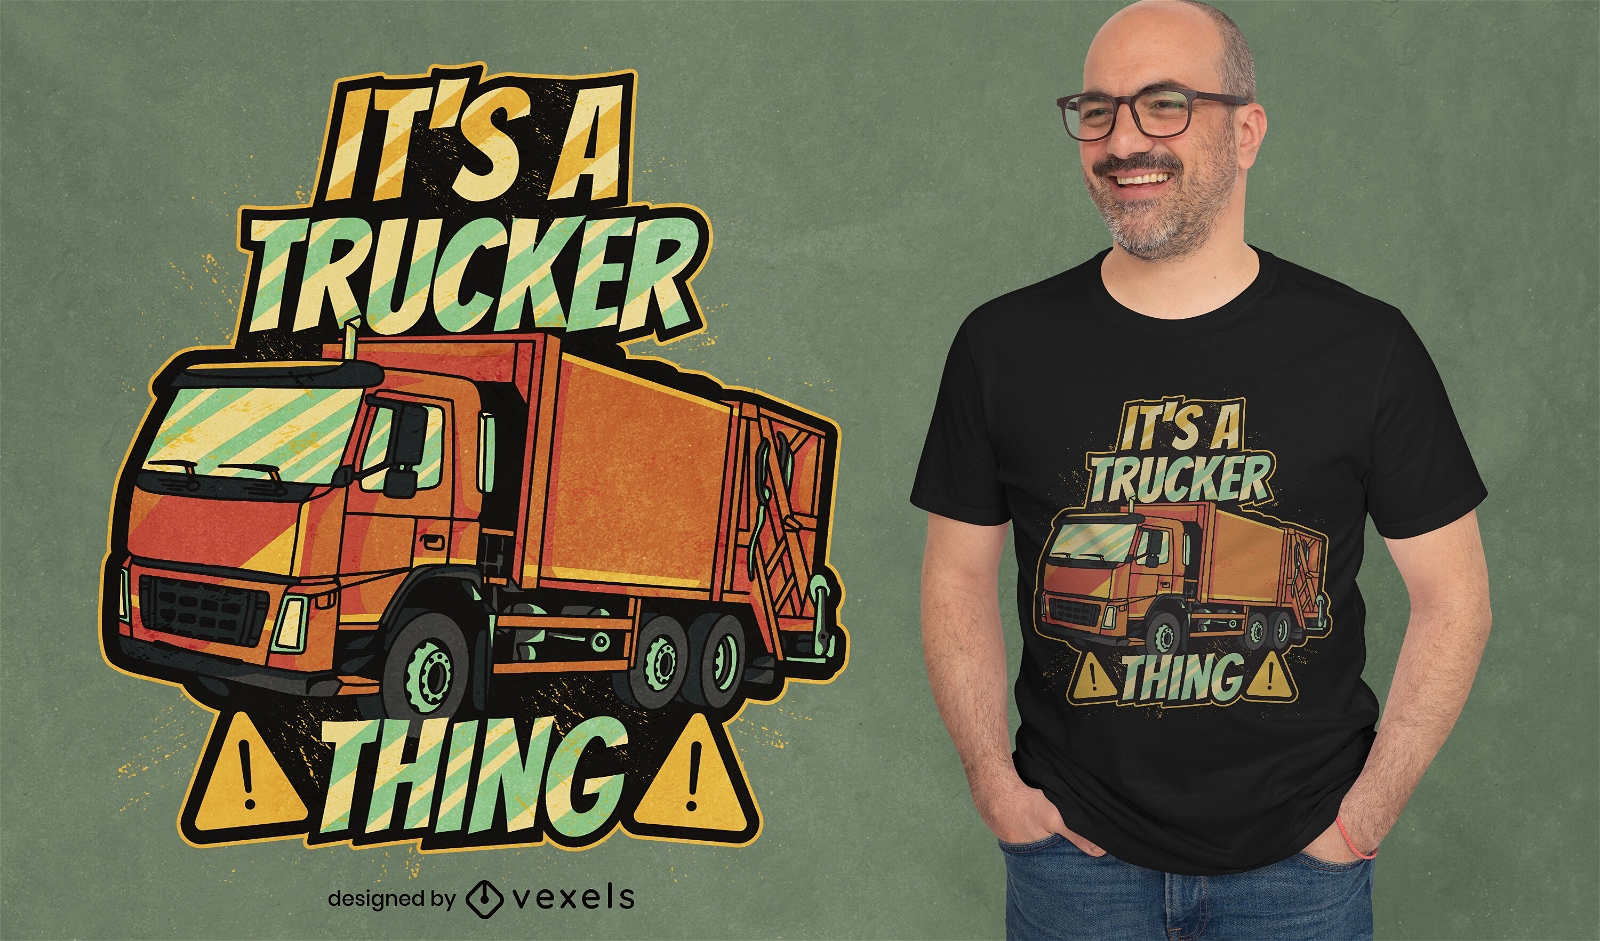 Trucker things quote t-shirt design